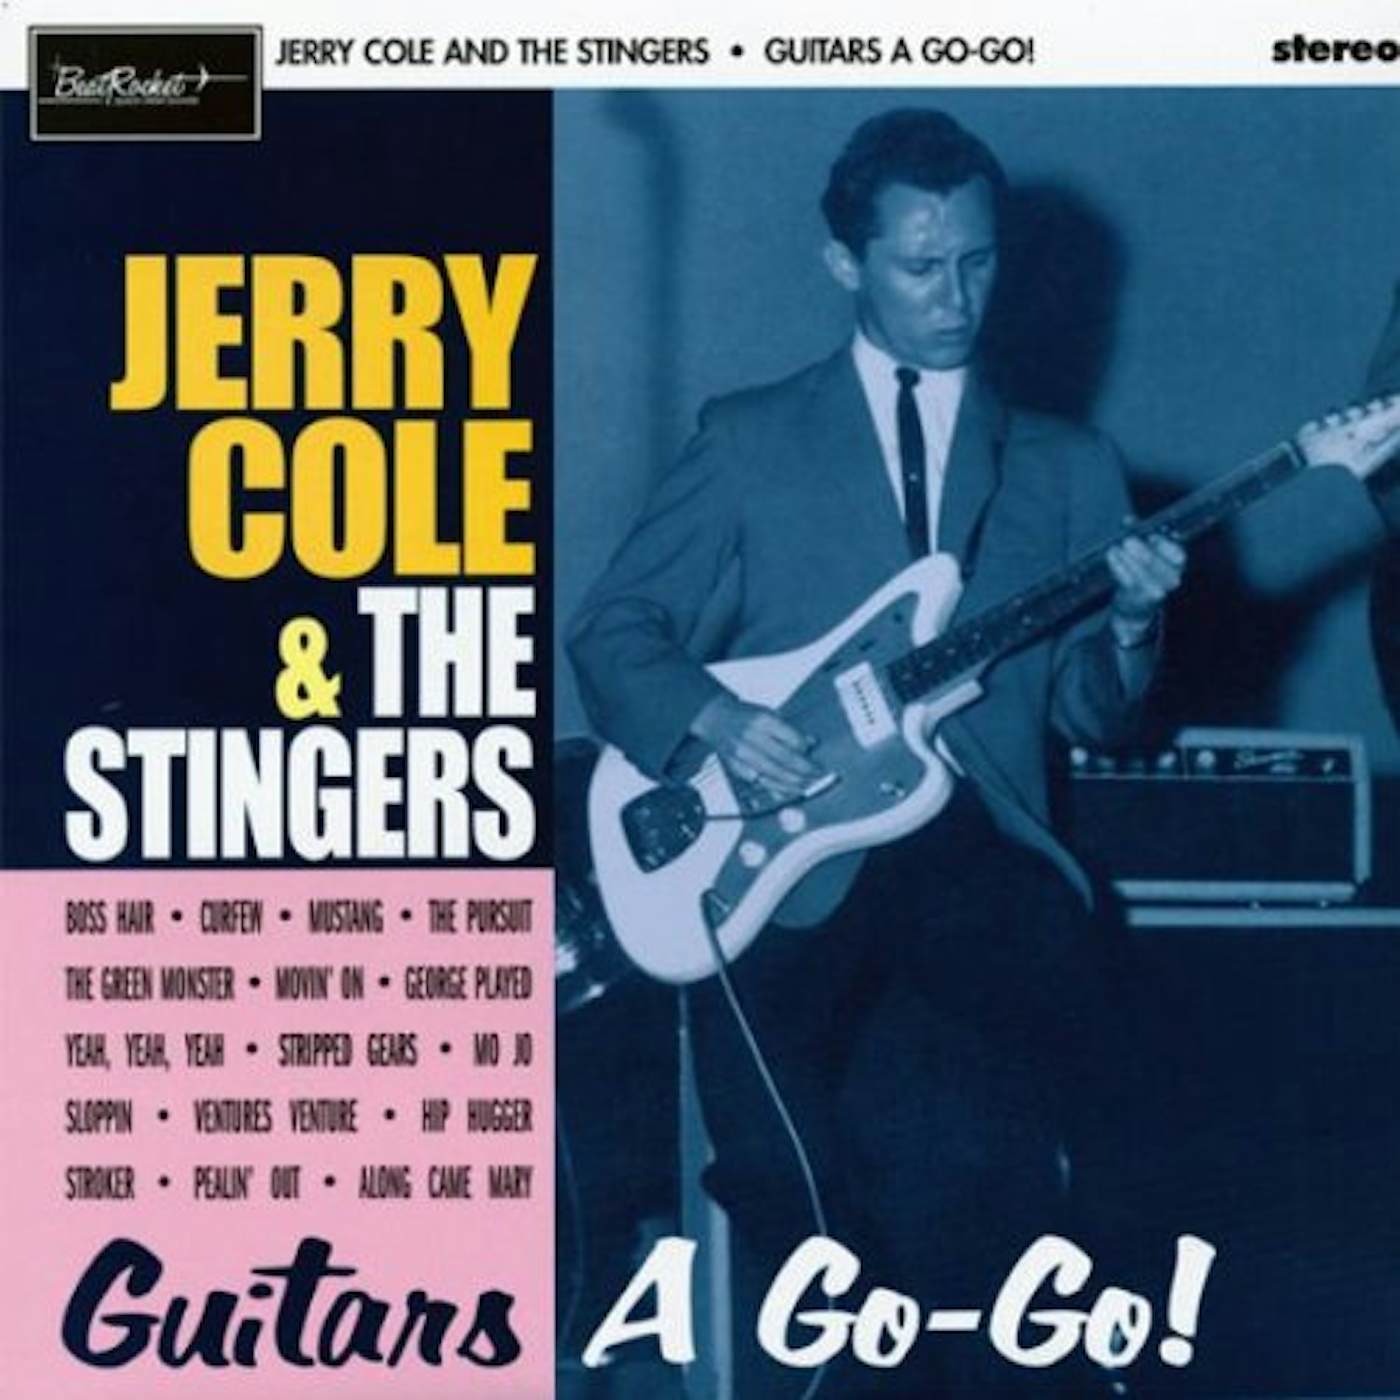 Jerry Cole & The Stingers GUITARS A GO-GO Vinyl Record